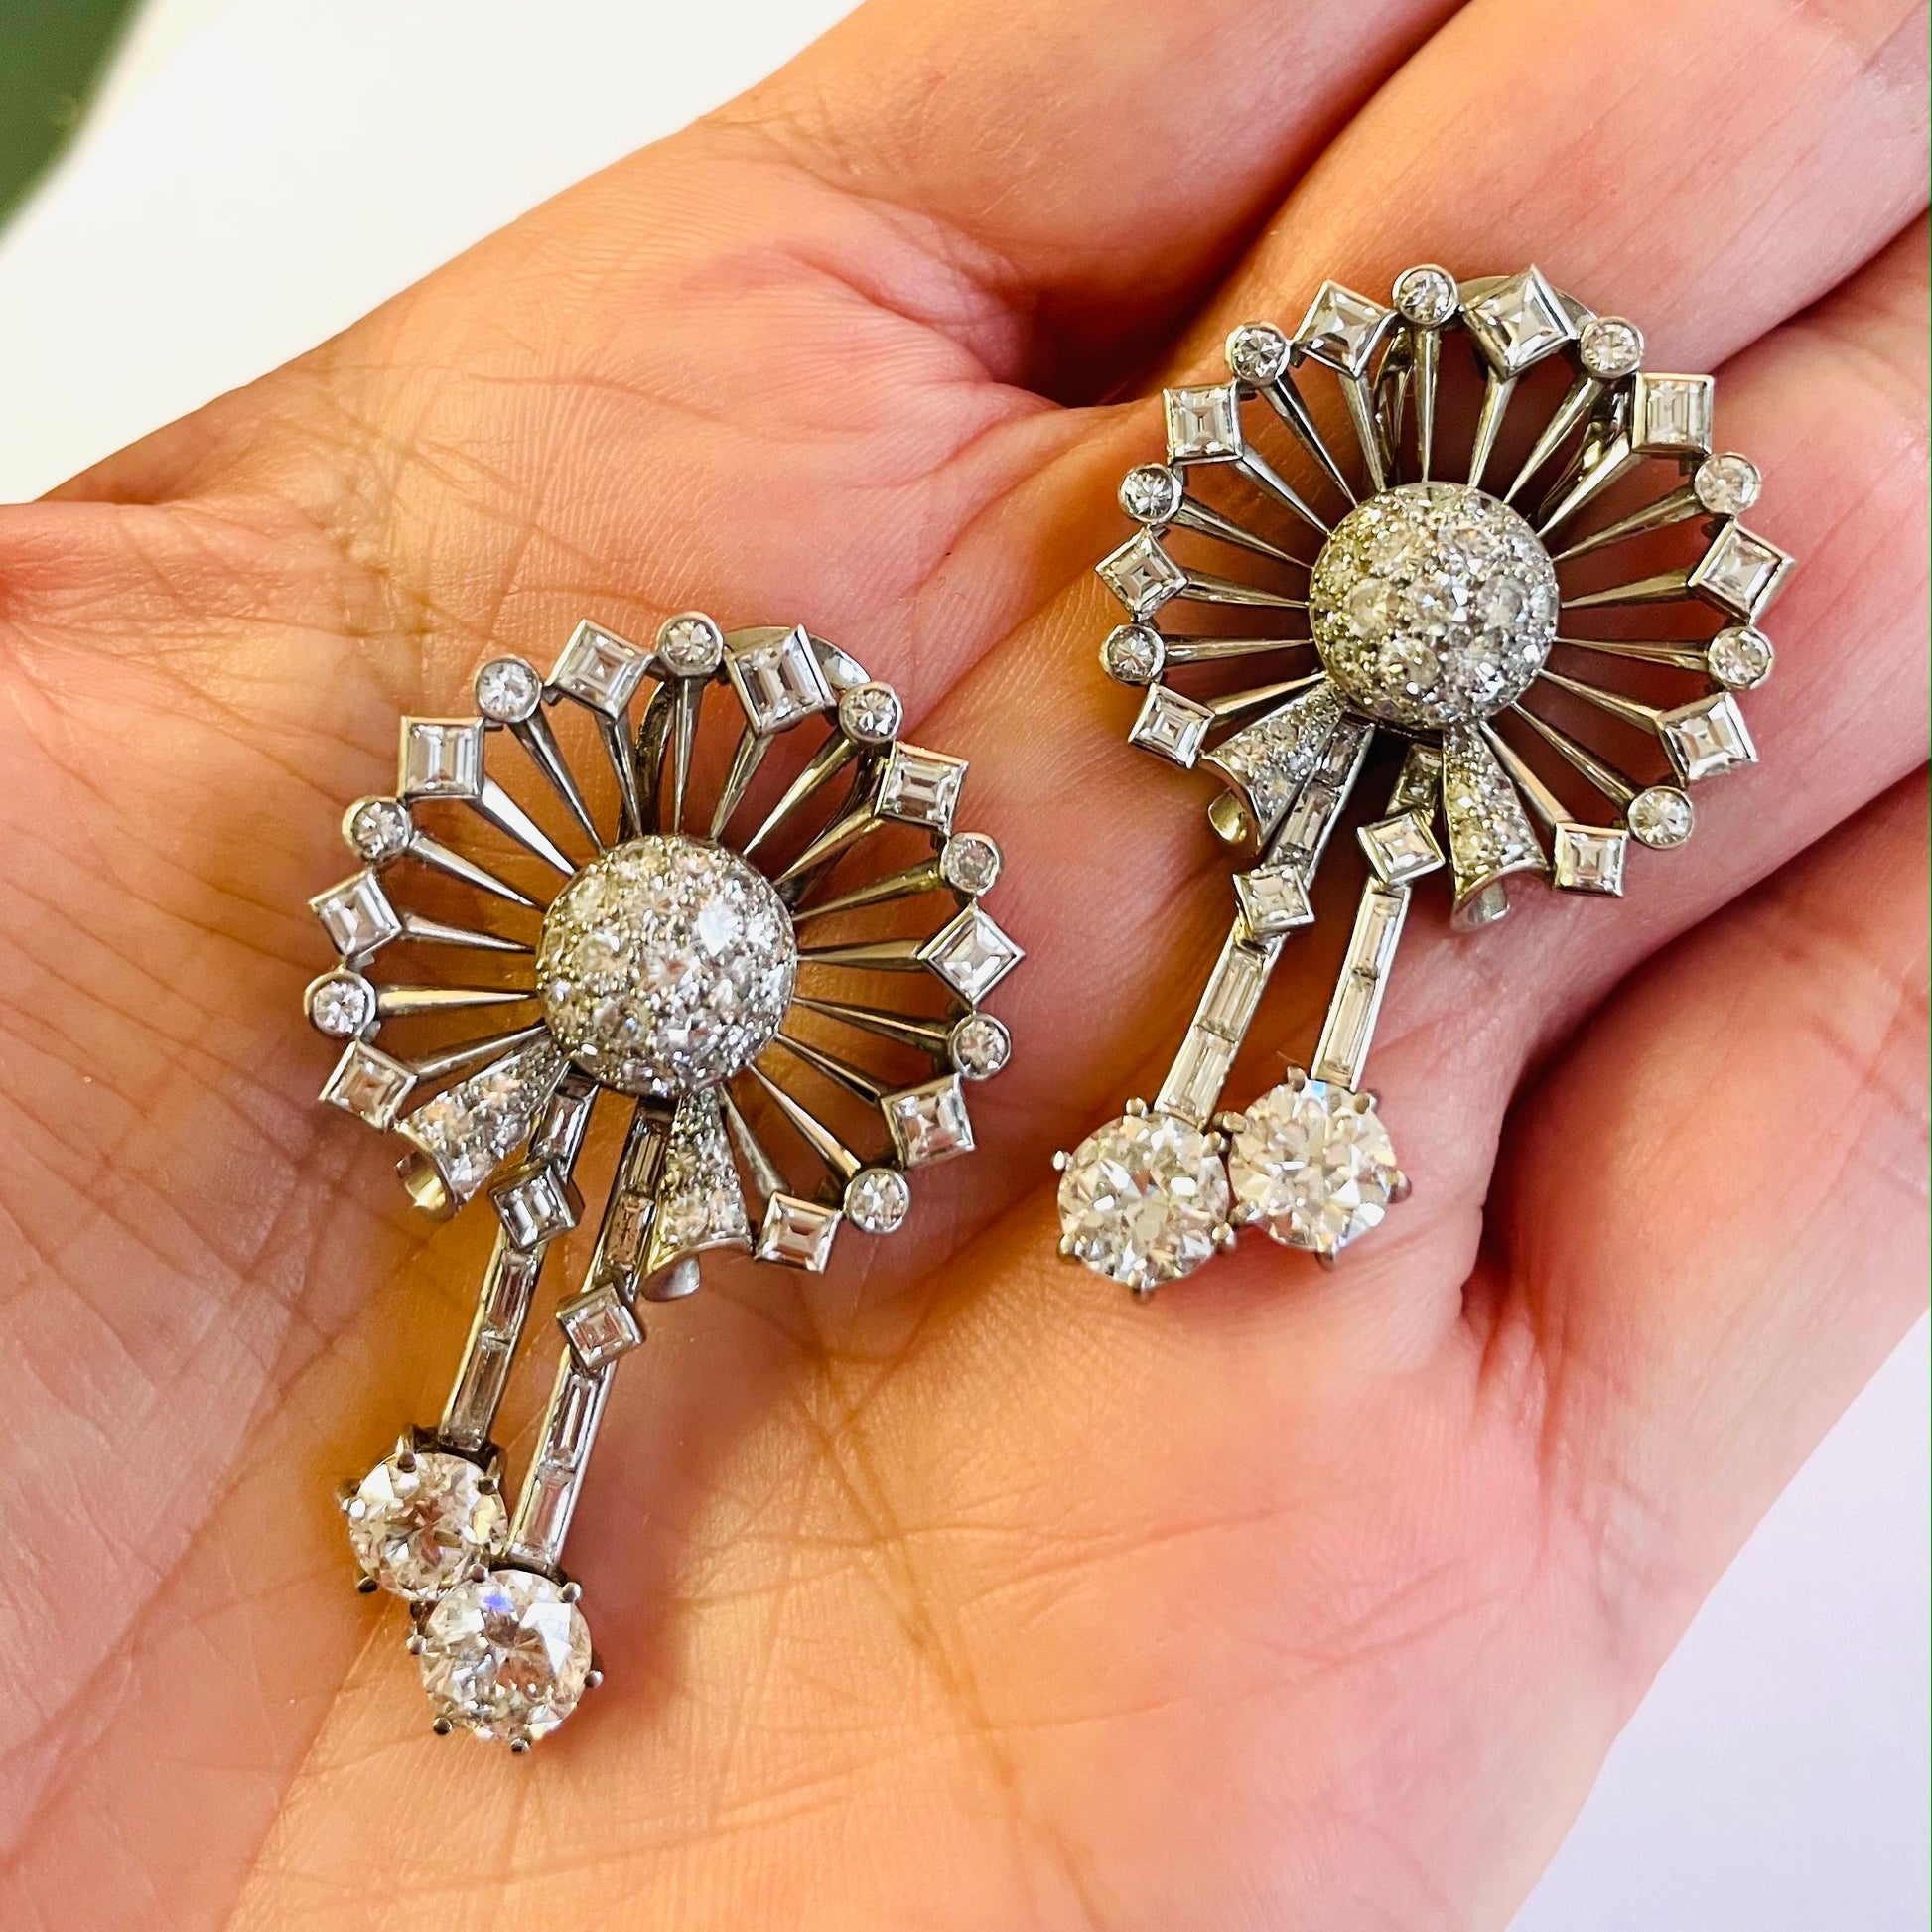 Platinum Diamond Earrings in hand